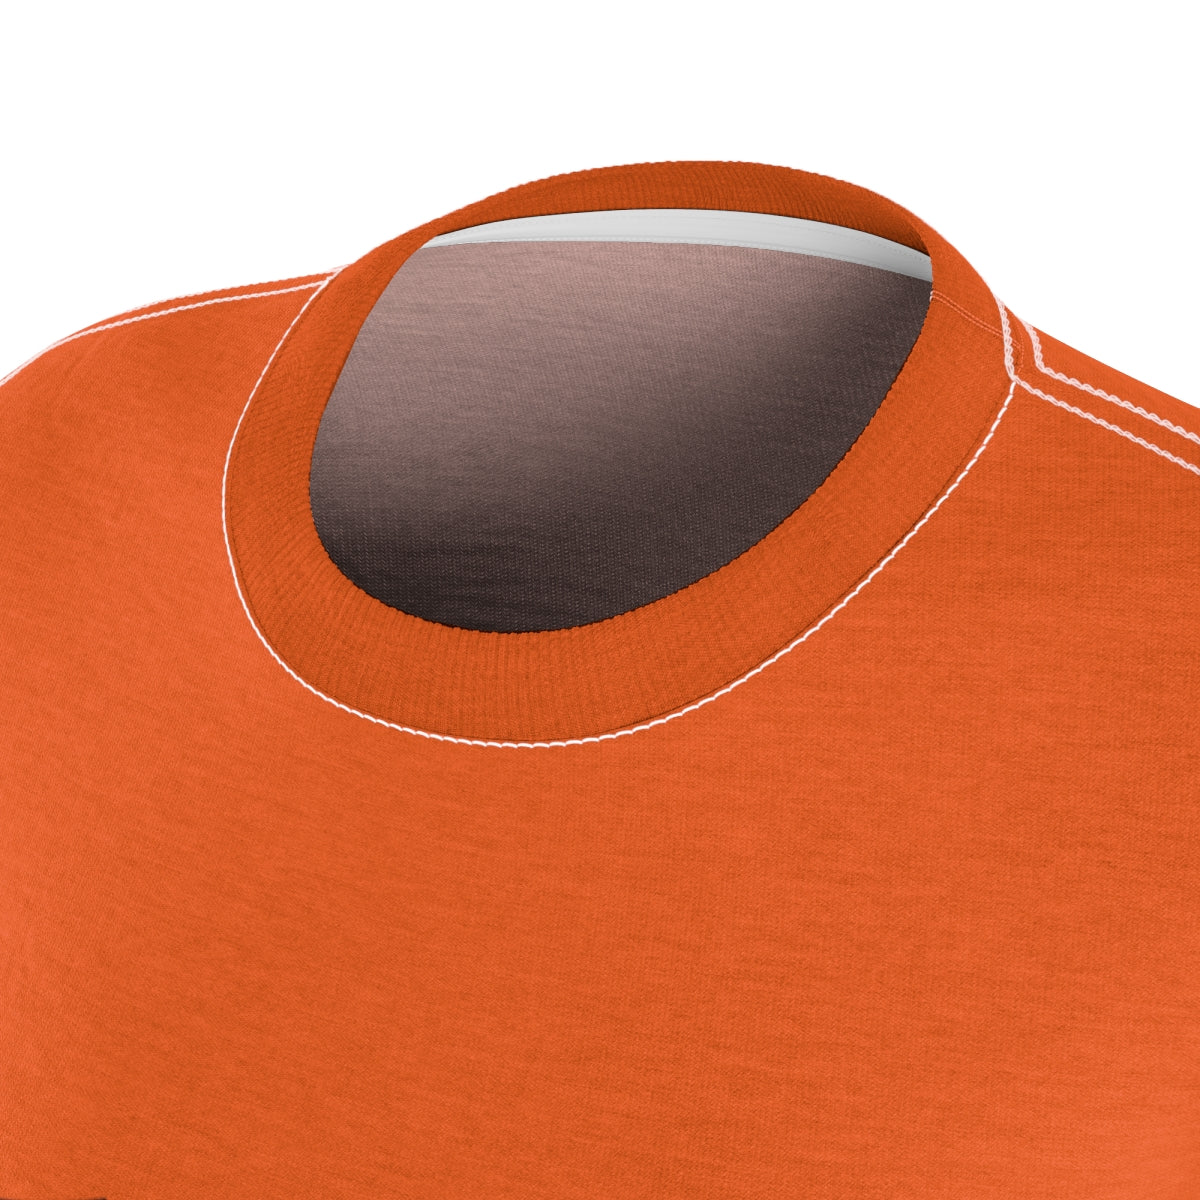 T-Shirt, Orange Halloween Ghost